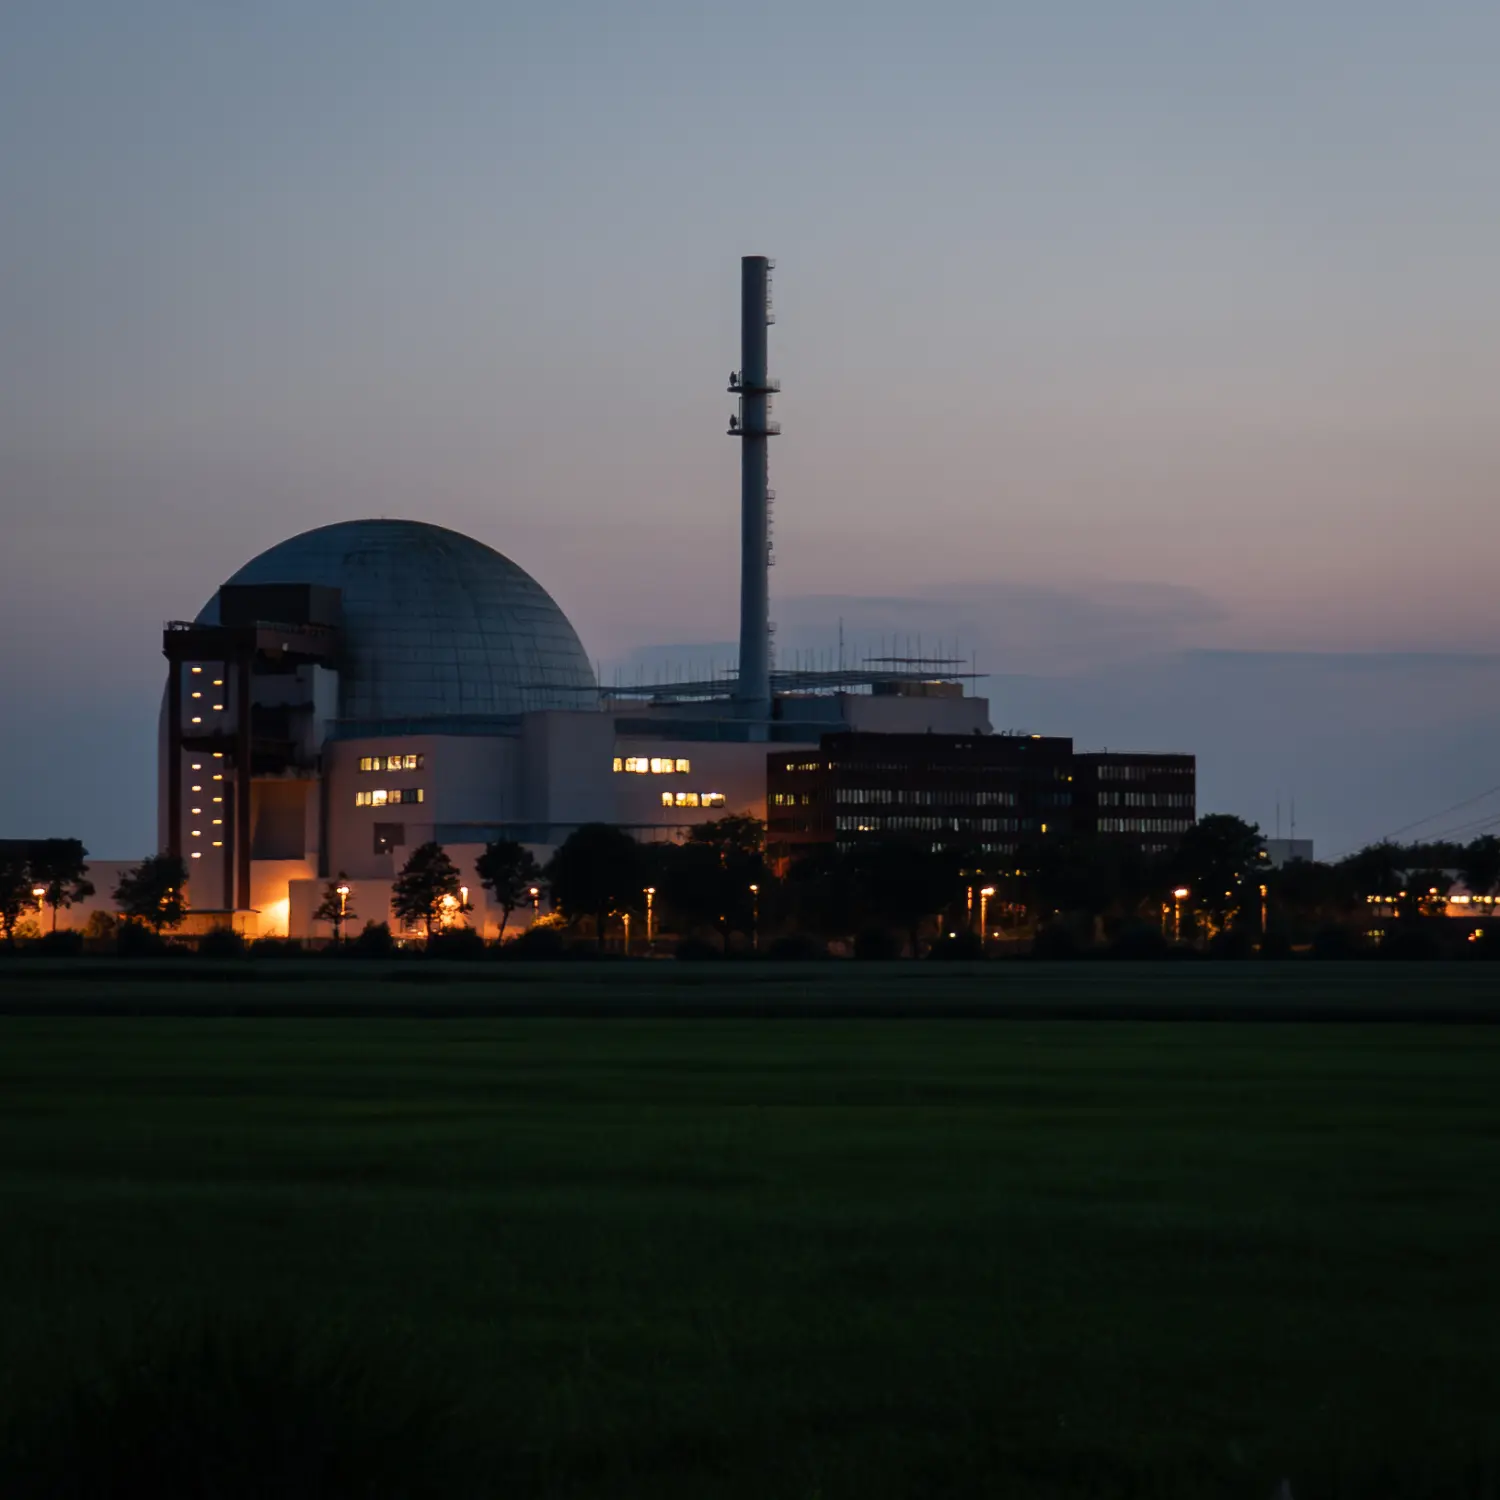 Kernkraftwerk Kienzle consult